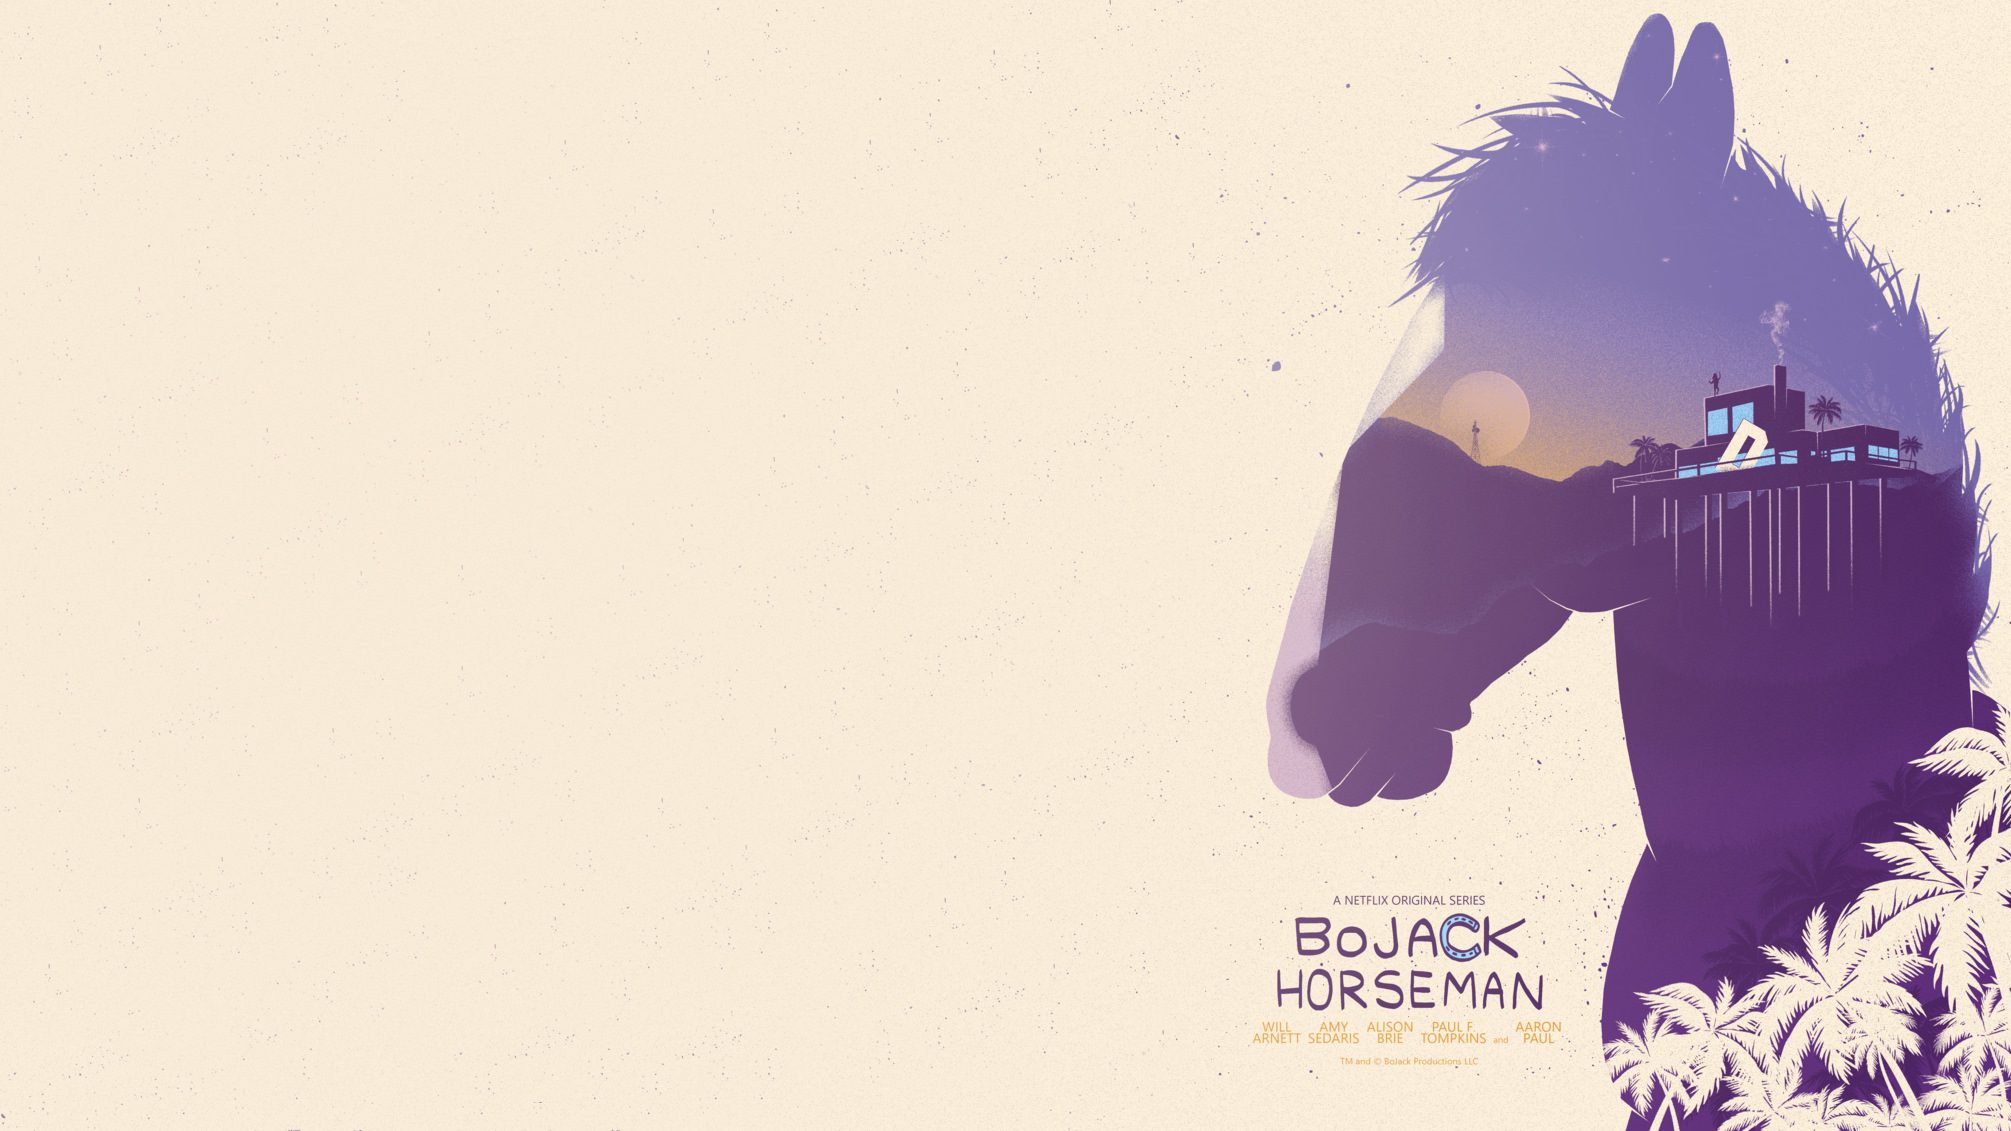 Bojack Horseman Wallpapers